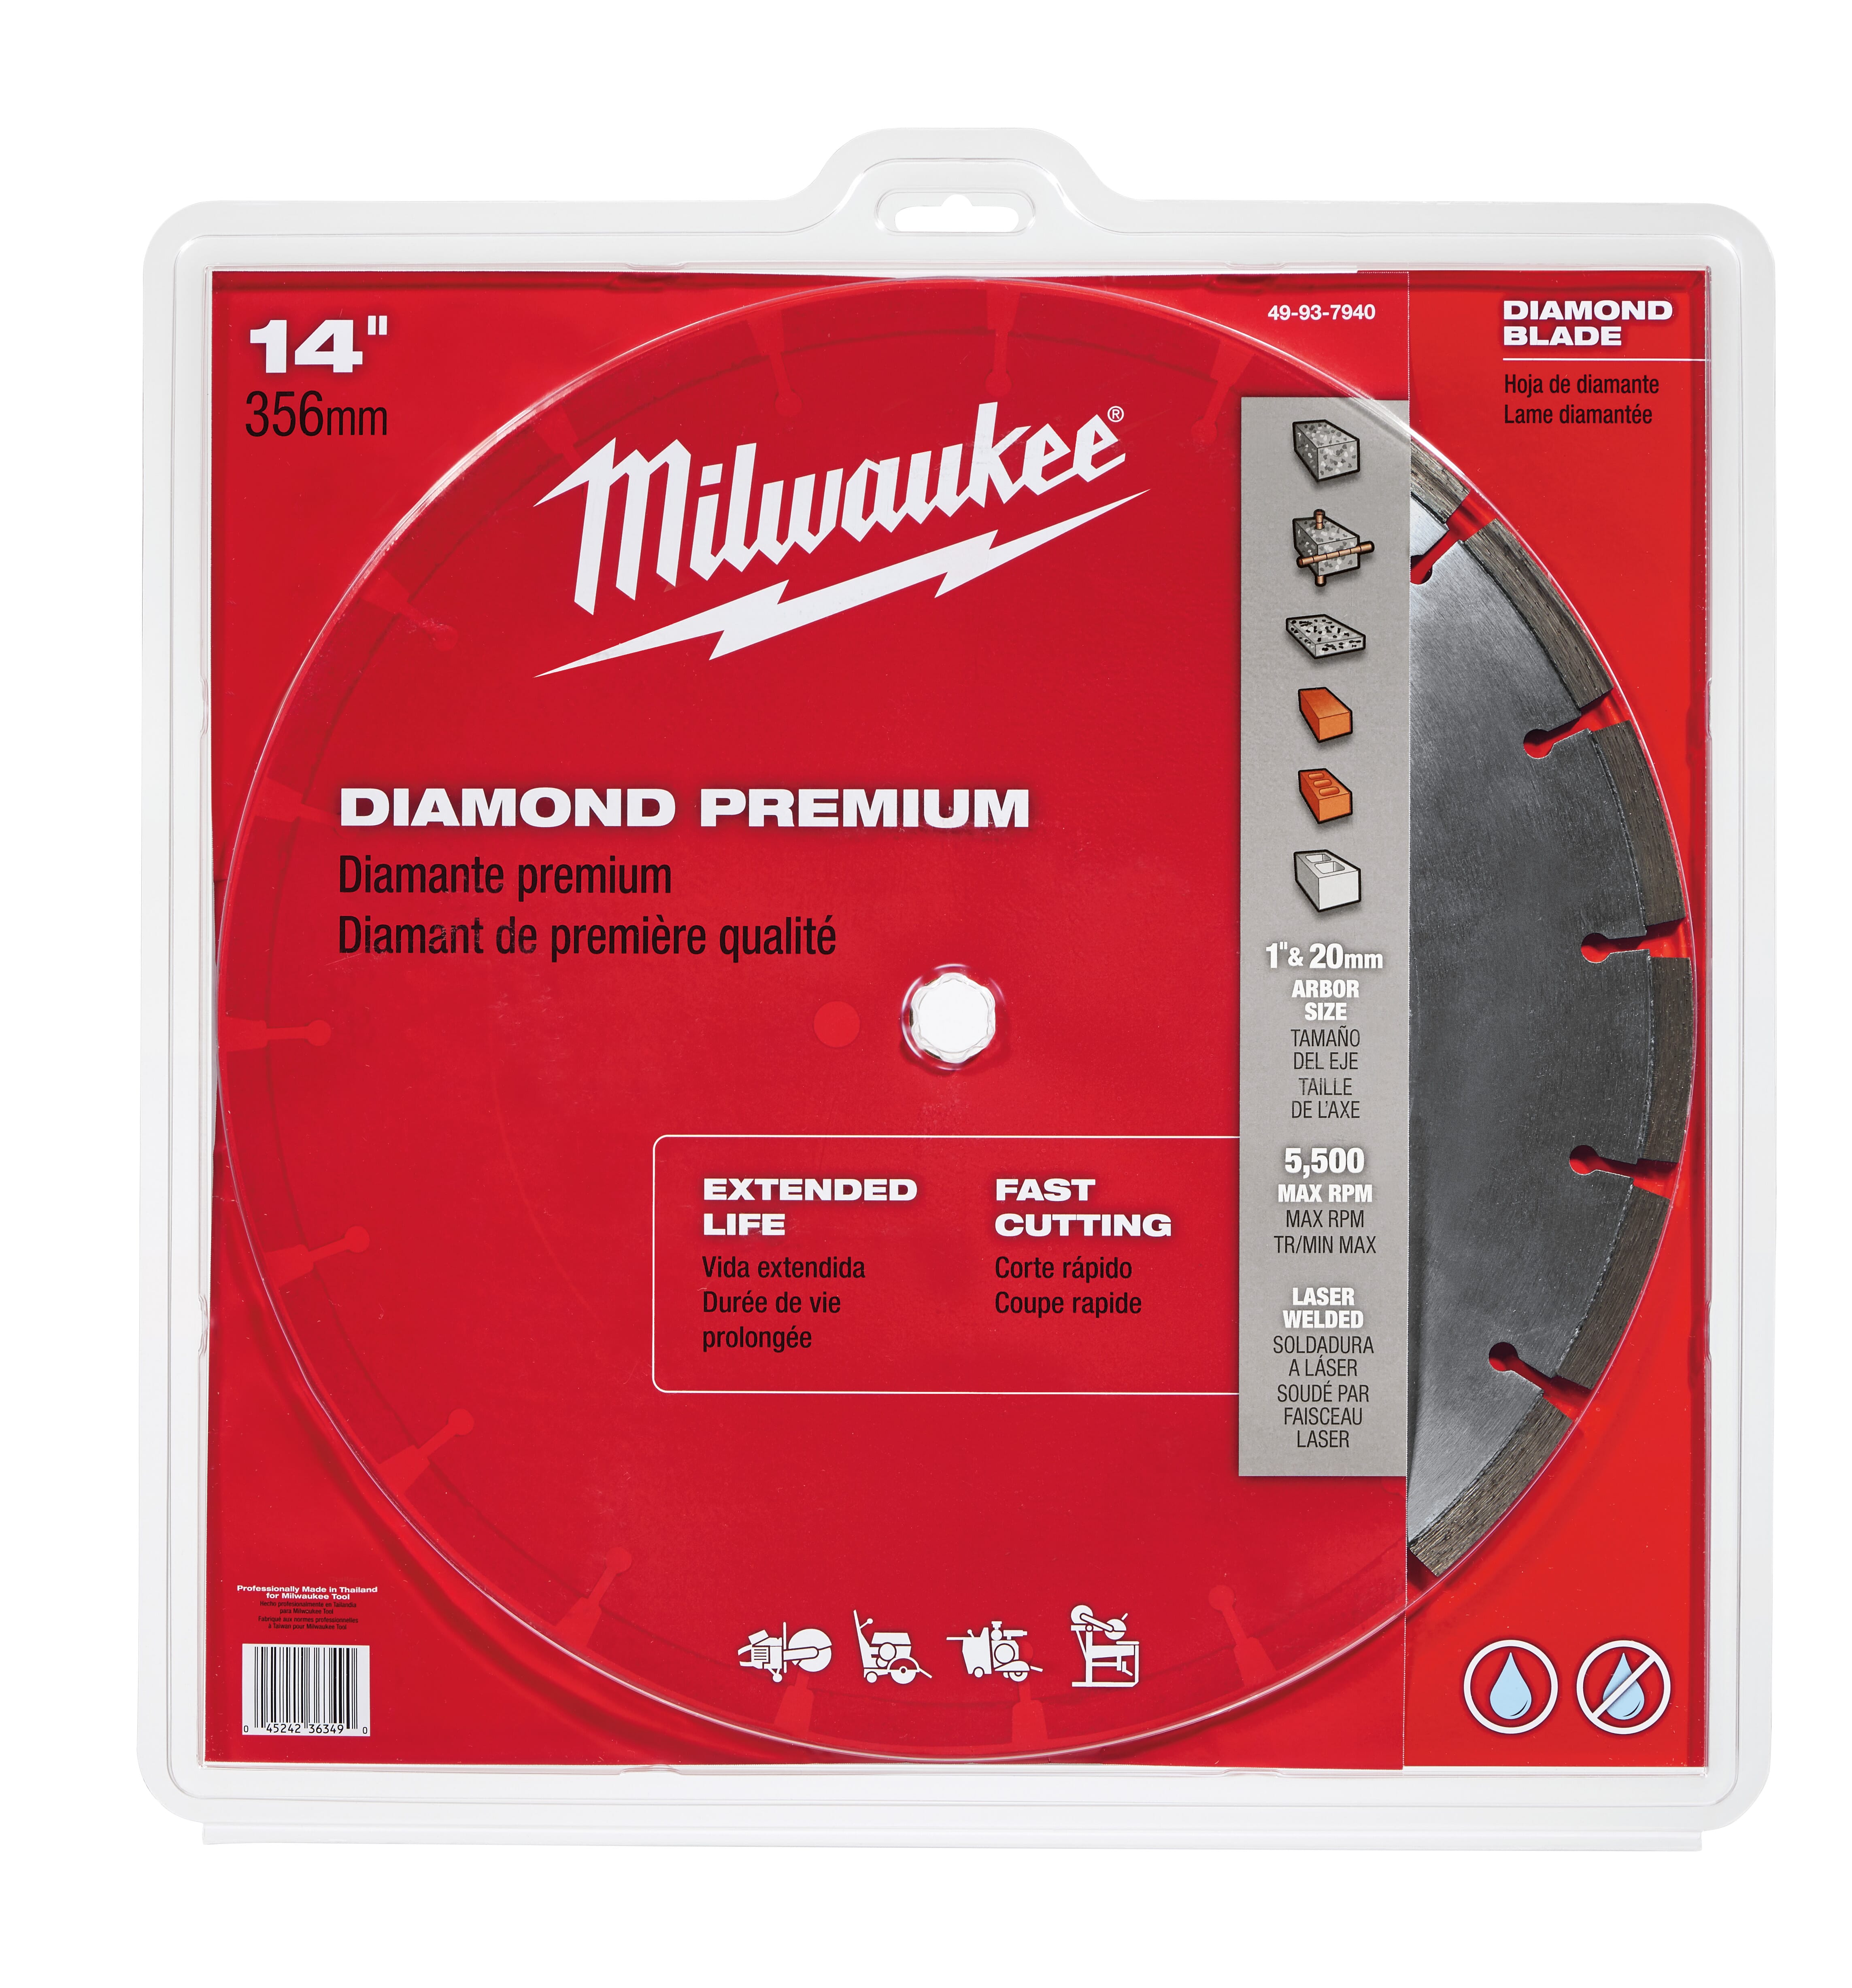 Milwaukee® 49-93-7940 Premium Segmented Circular Diamond Saw Blade, 14 in Dia Blade, 1 in, 20 mm Arbor/Shank, Dry/Wet Cutting